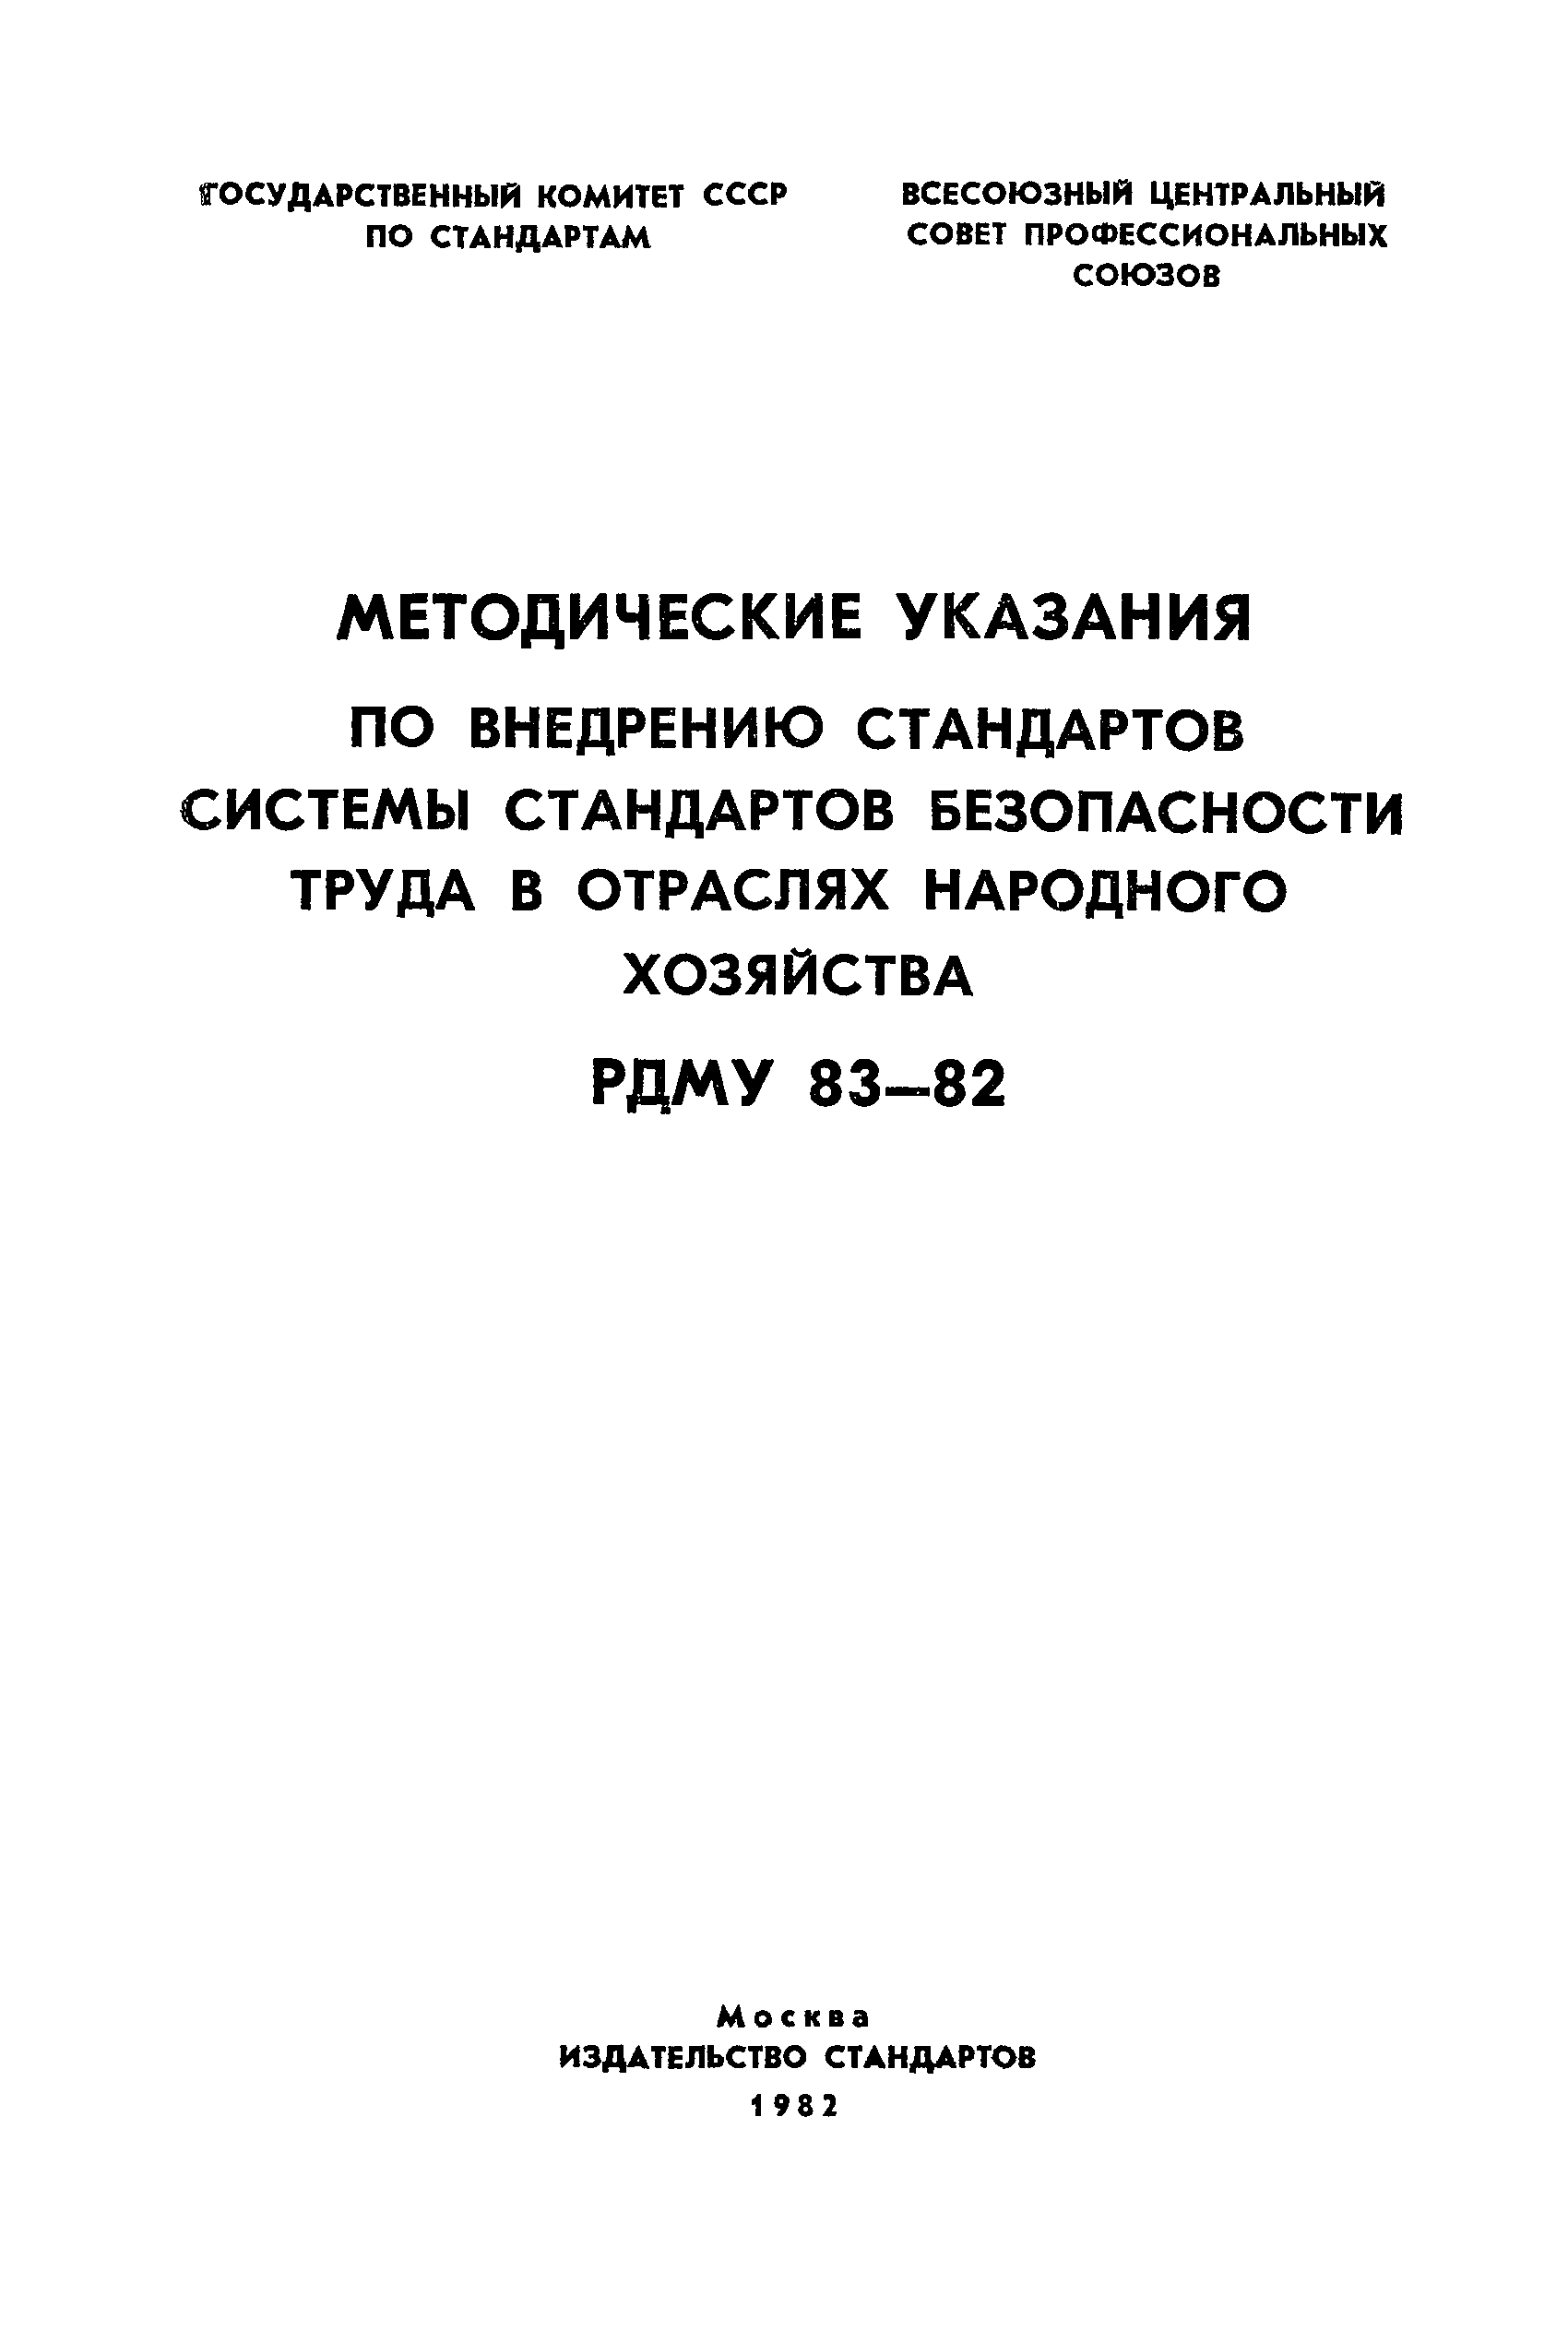 РДМУ 83-82